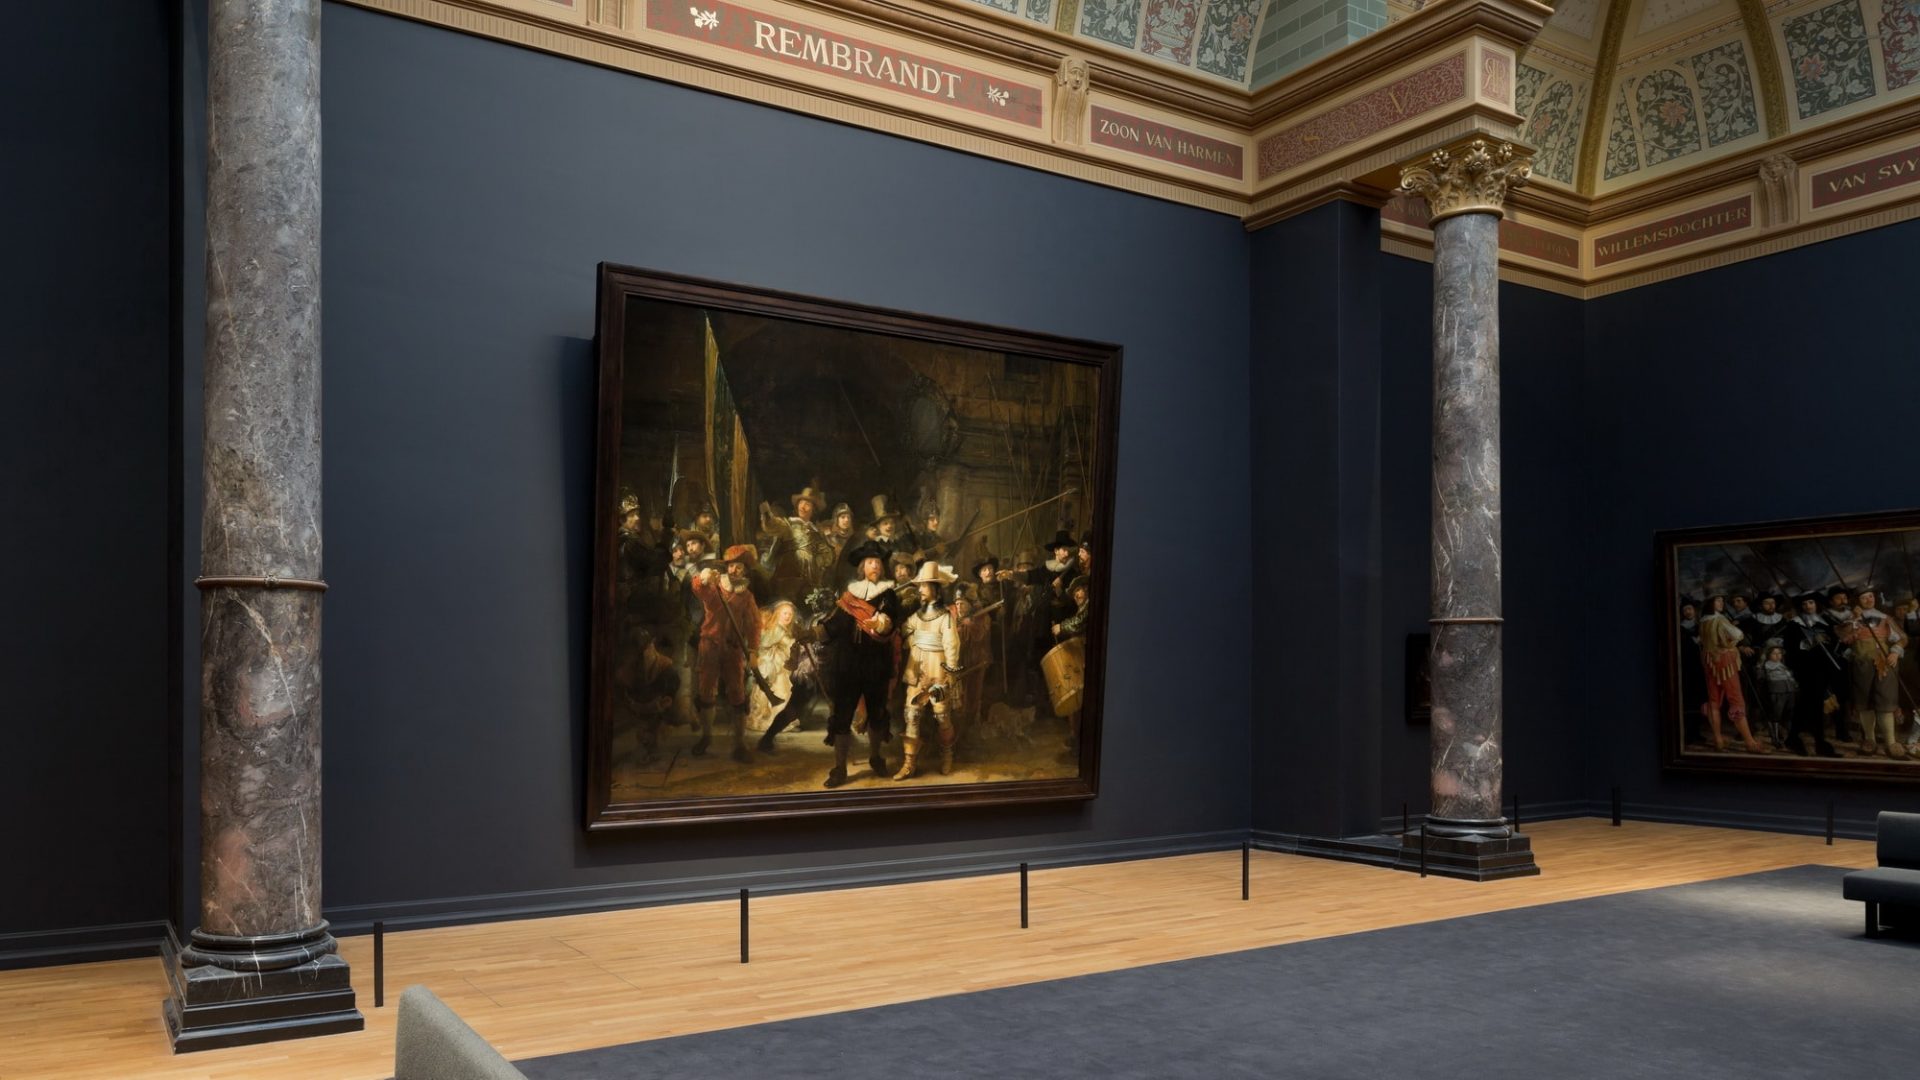 WhybuildinHolland-Rijksmuseum 10. Night Watch Gallery (1) 16x9_resize